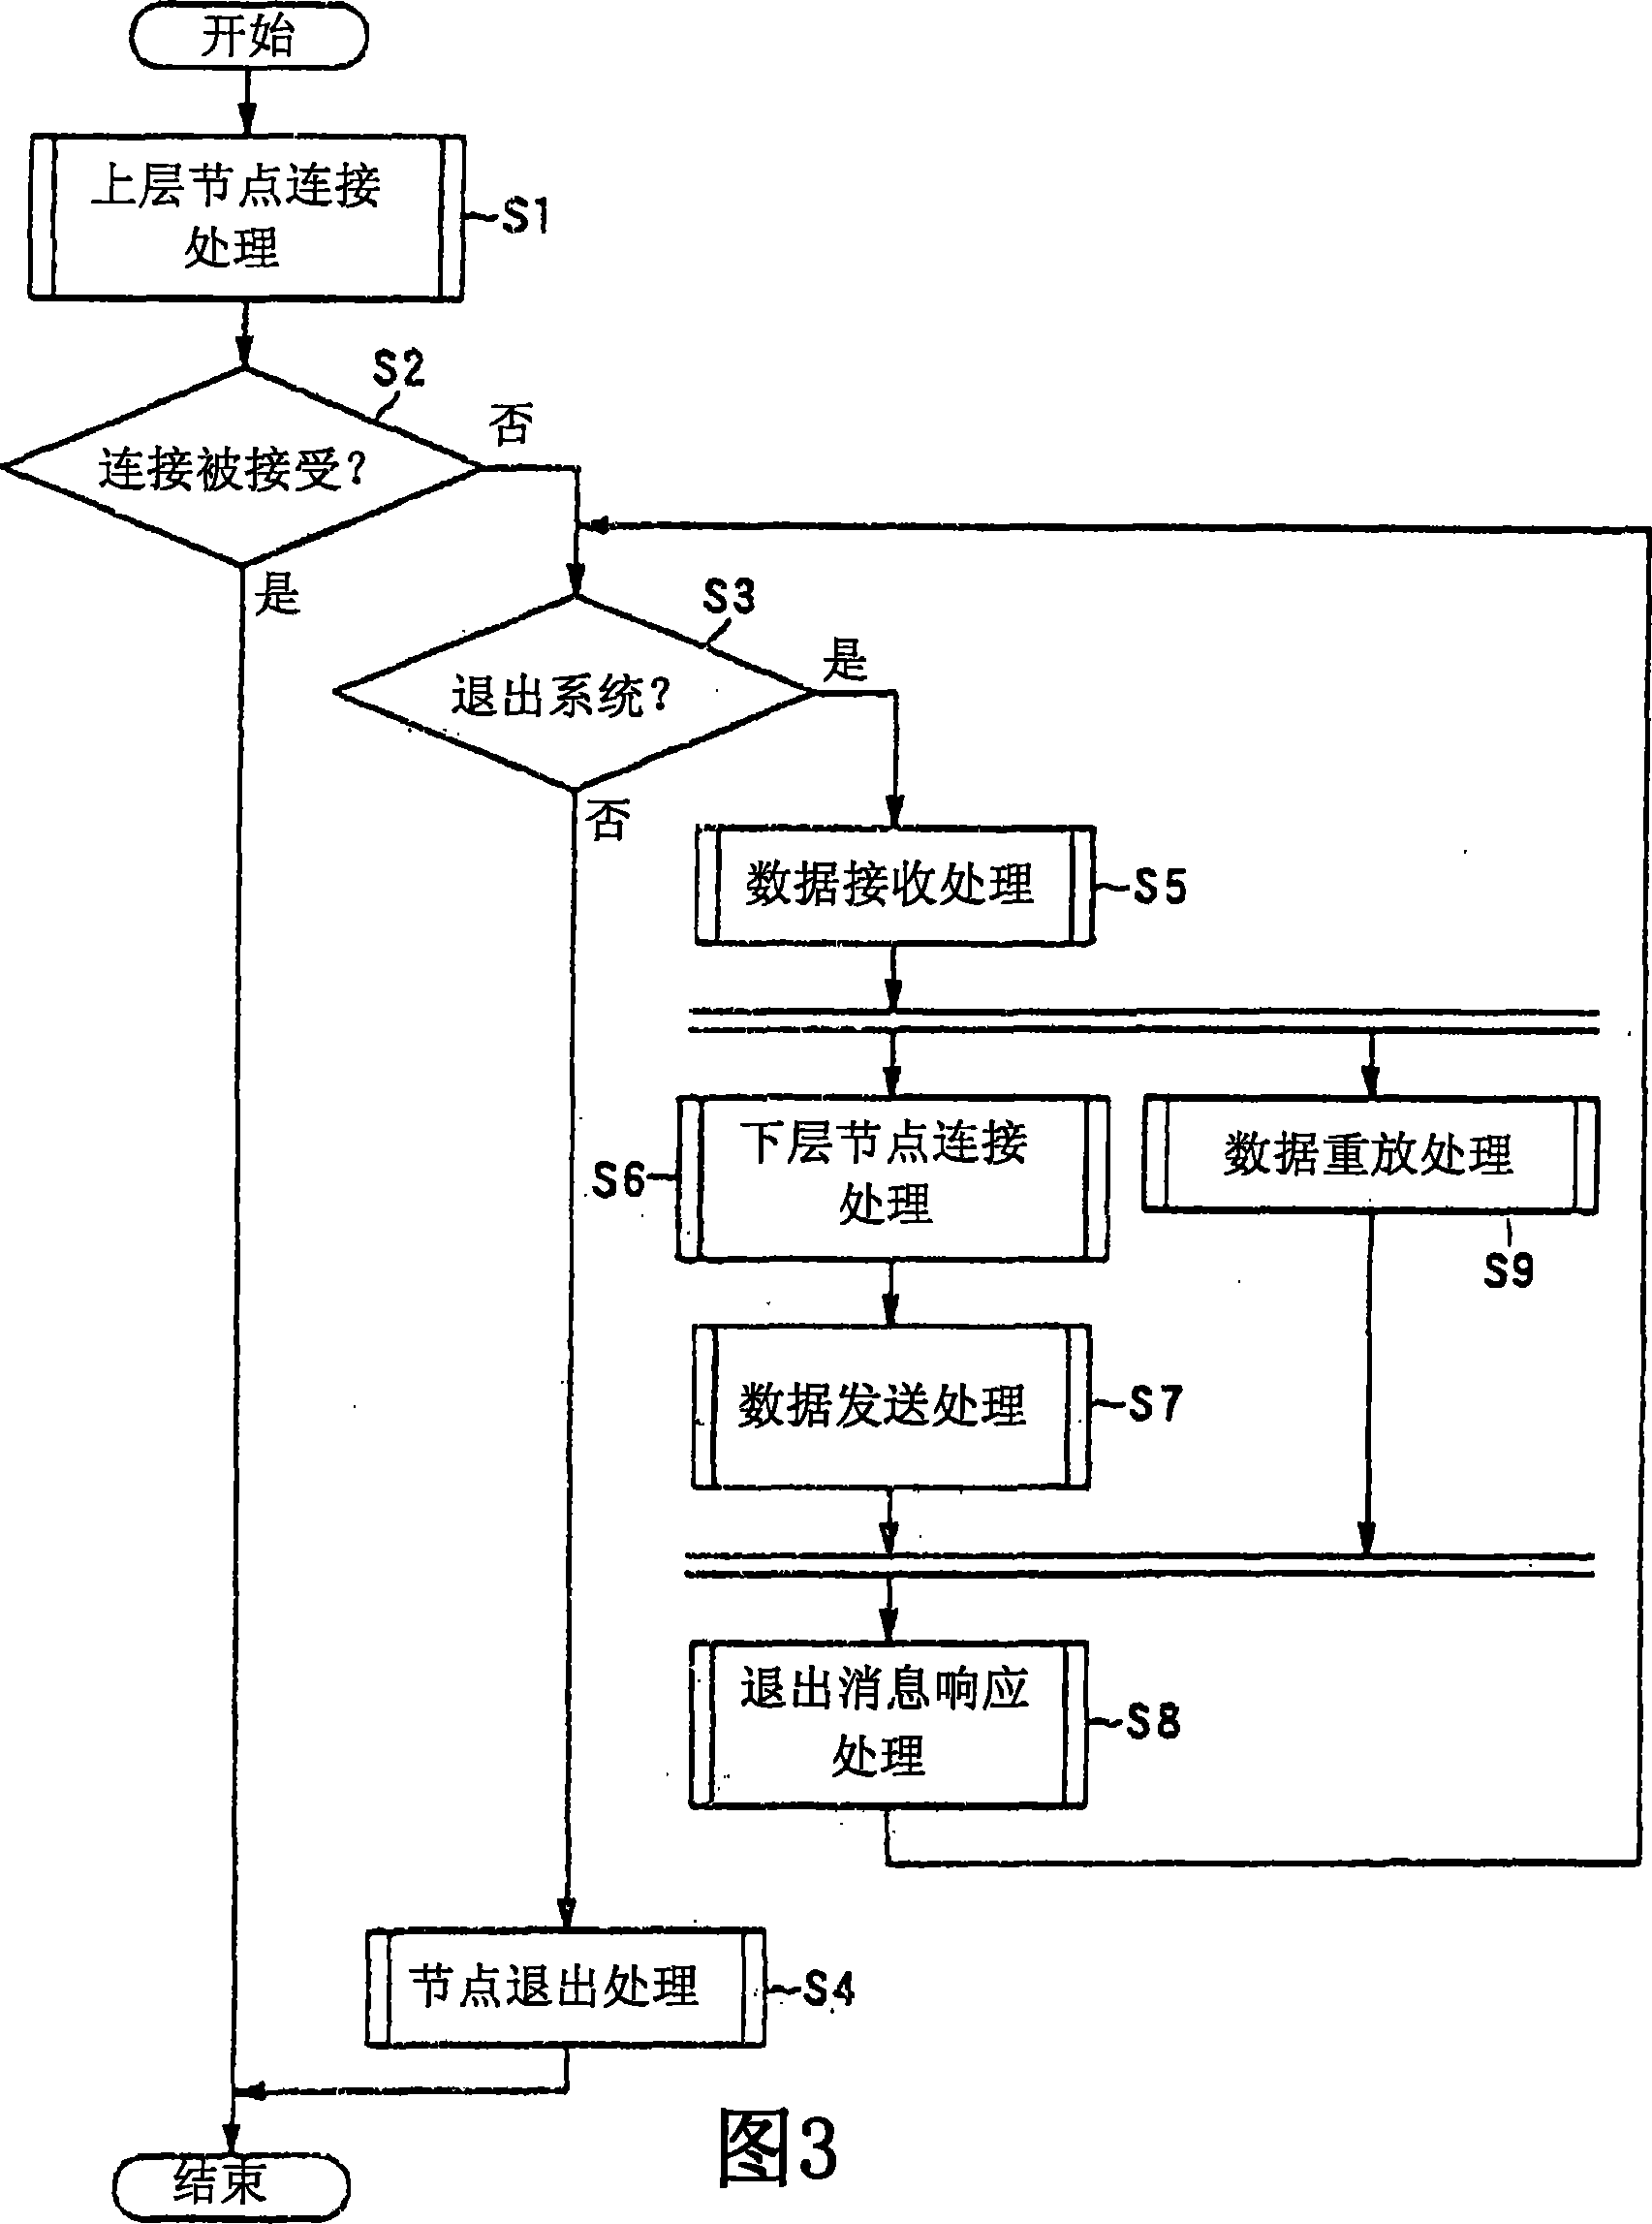 Connection mode controlling apparatus, connection mode controlling method, and connection mode controlling program